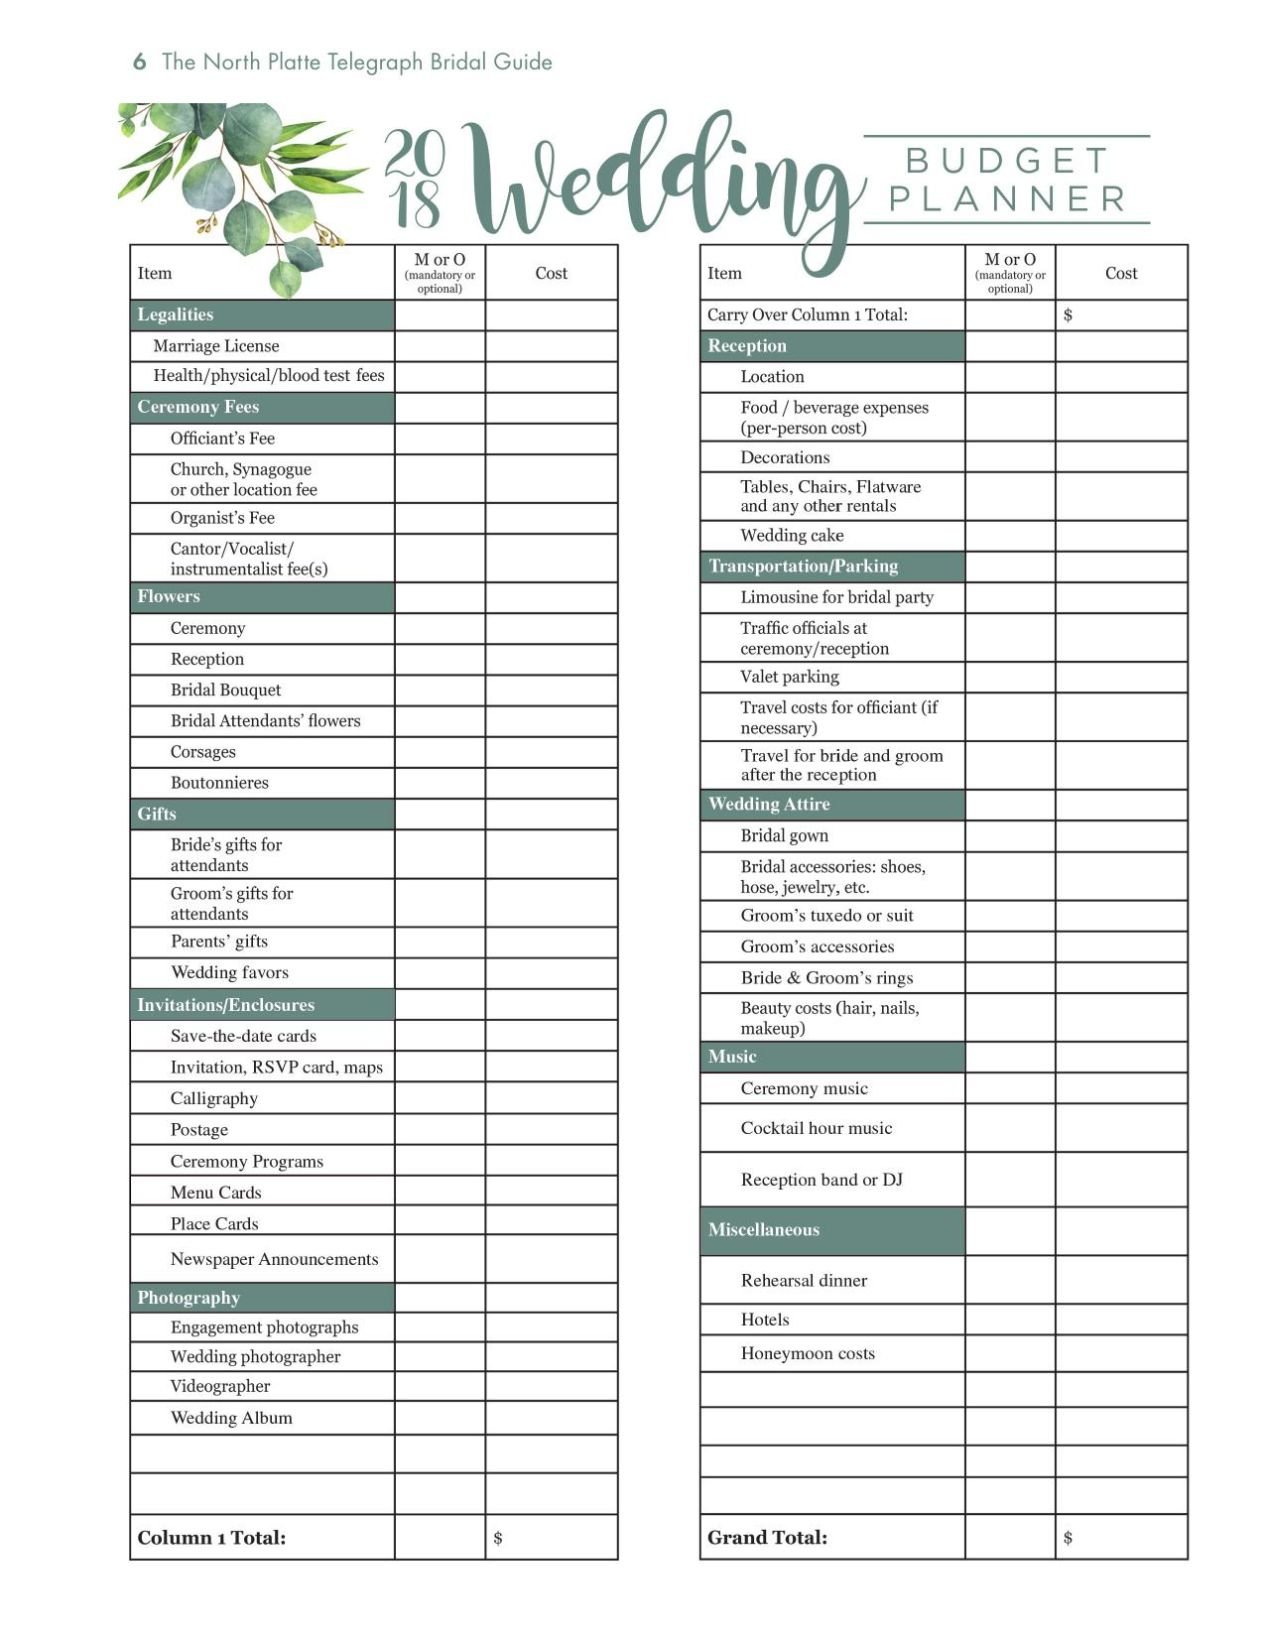 printable wedding budget planner worksheet